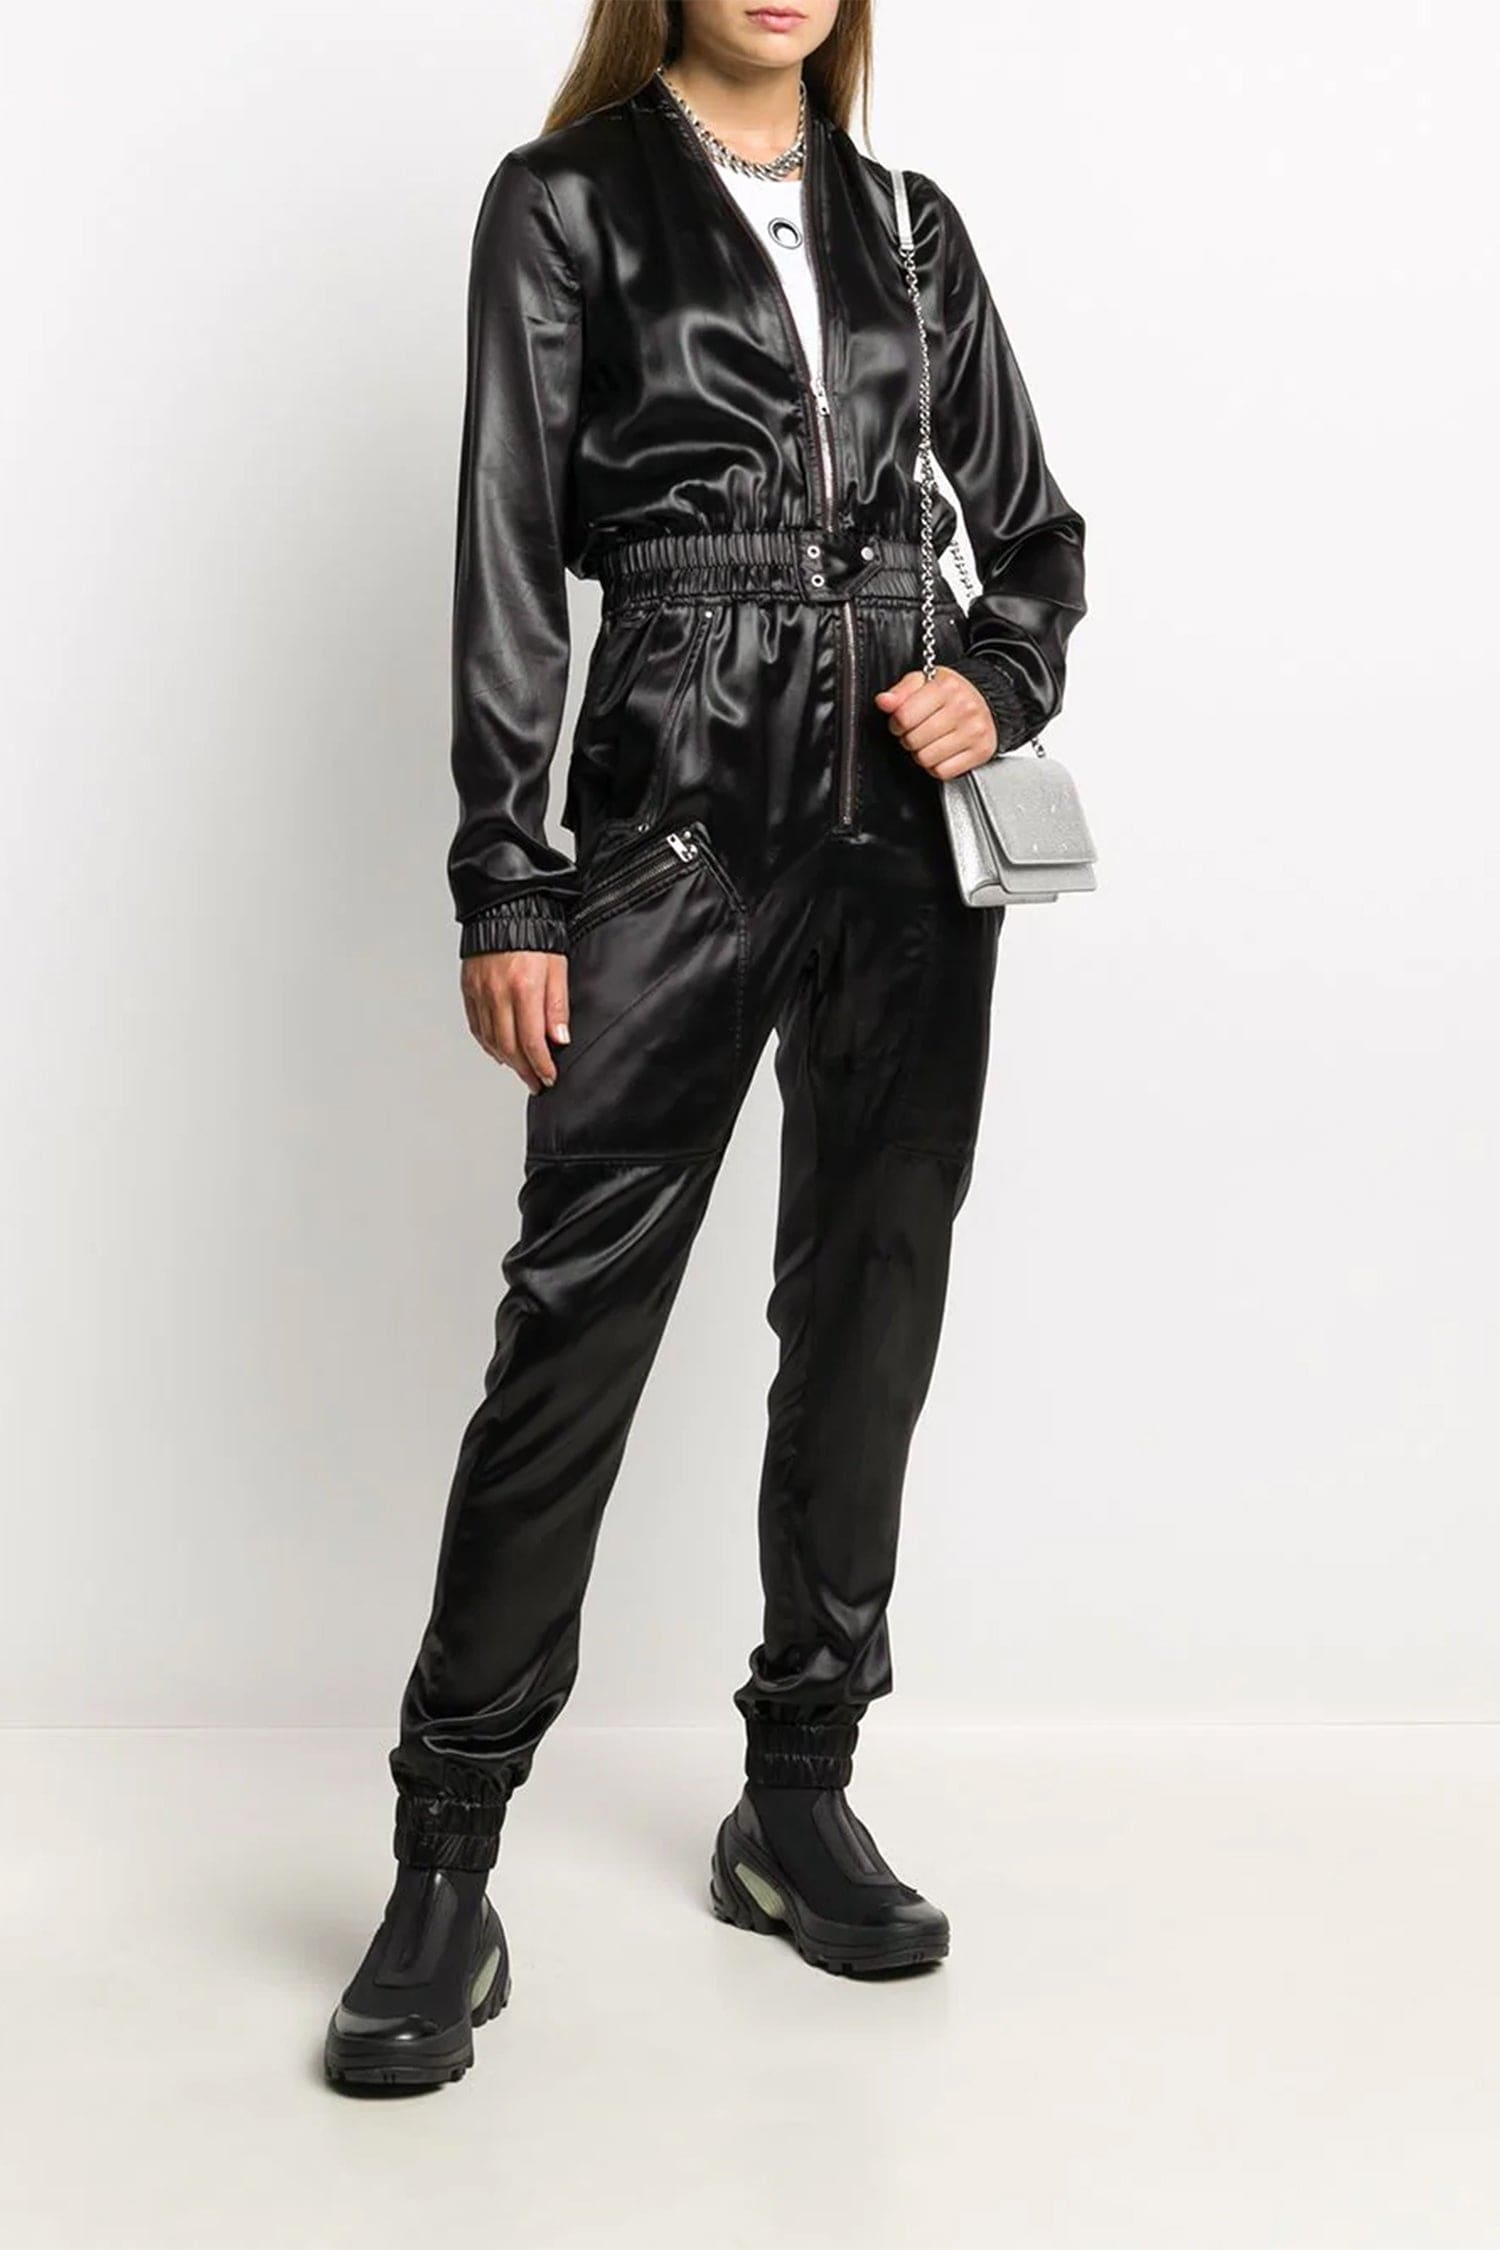 Black Sheer Long Sleeves Faux Leather Bodysuit – IRHAZ